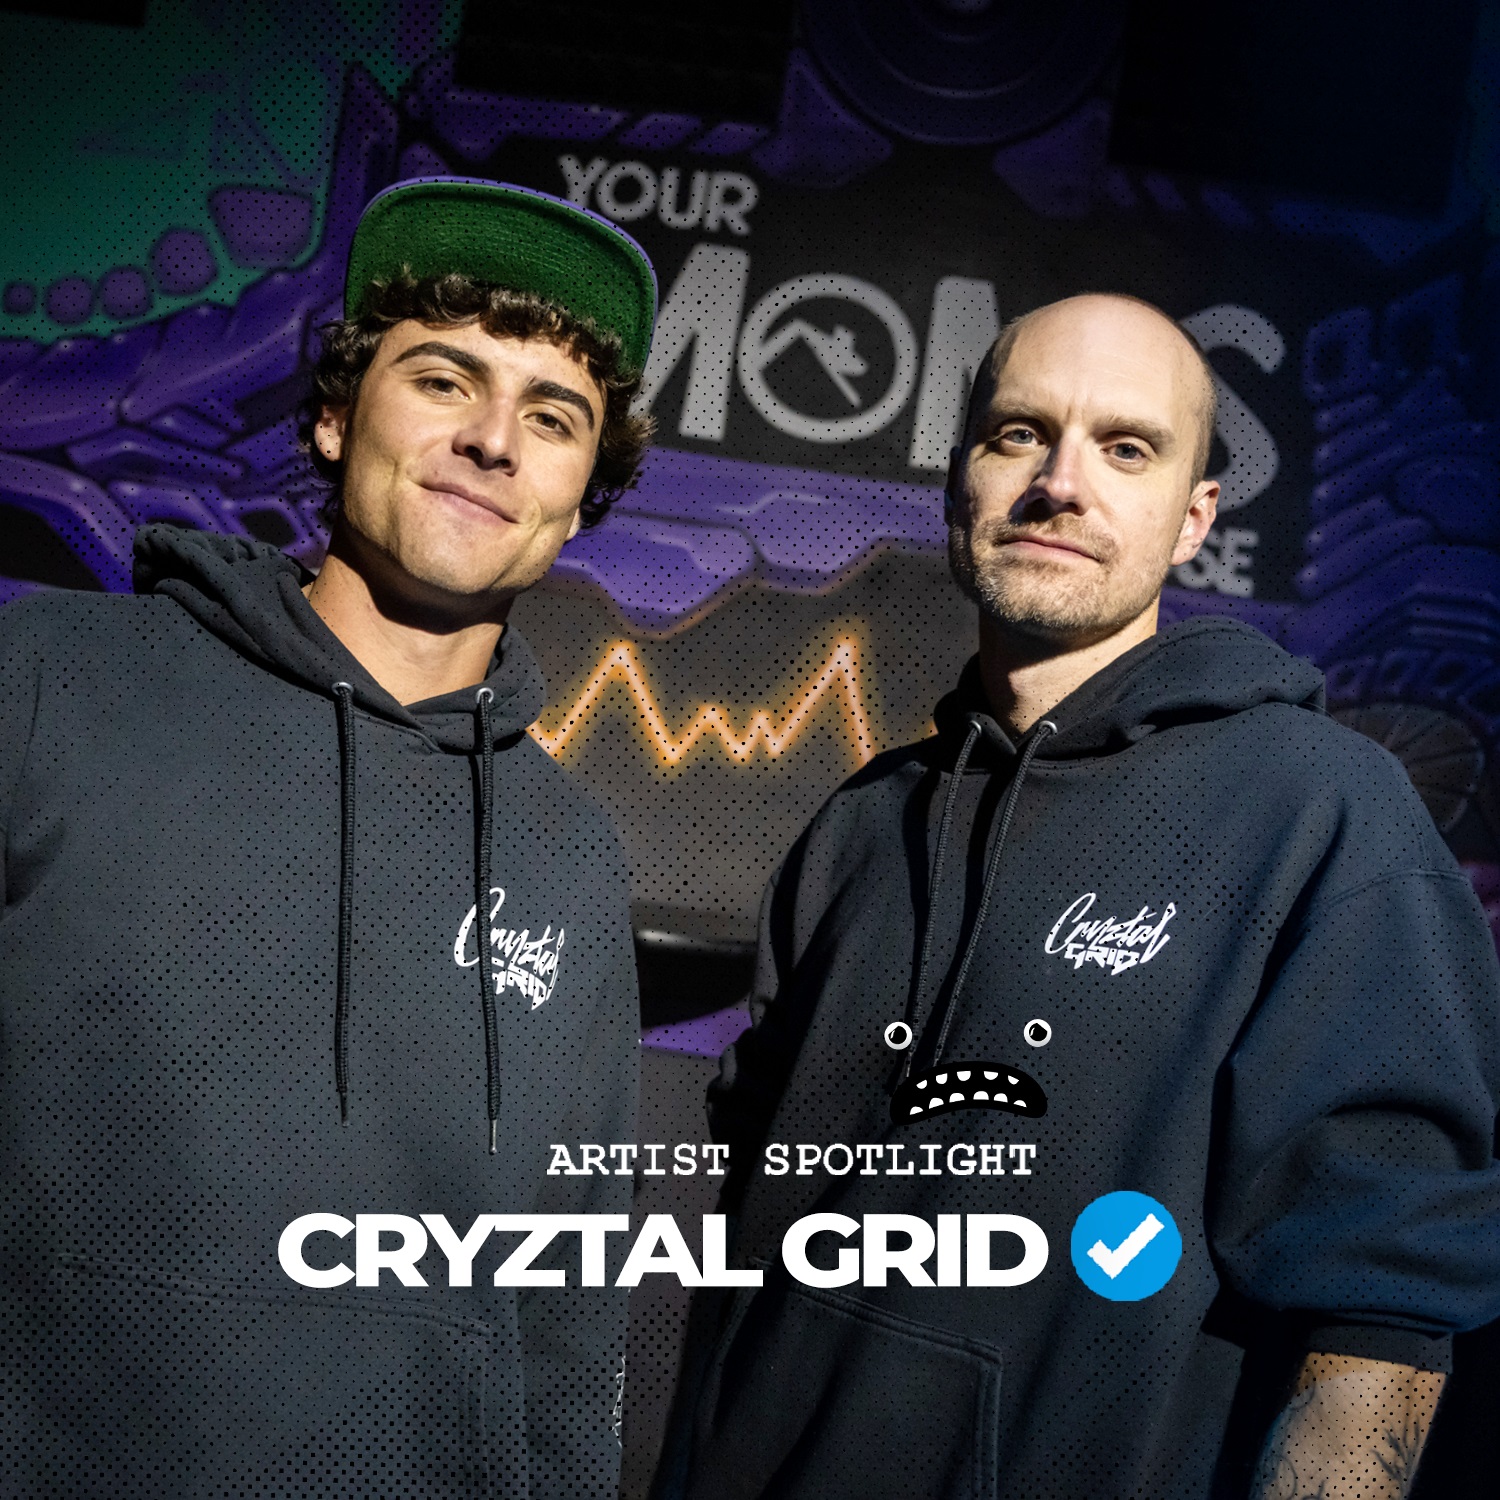 Who is Cryztal Grid ?